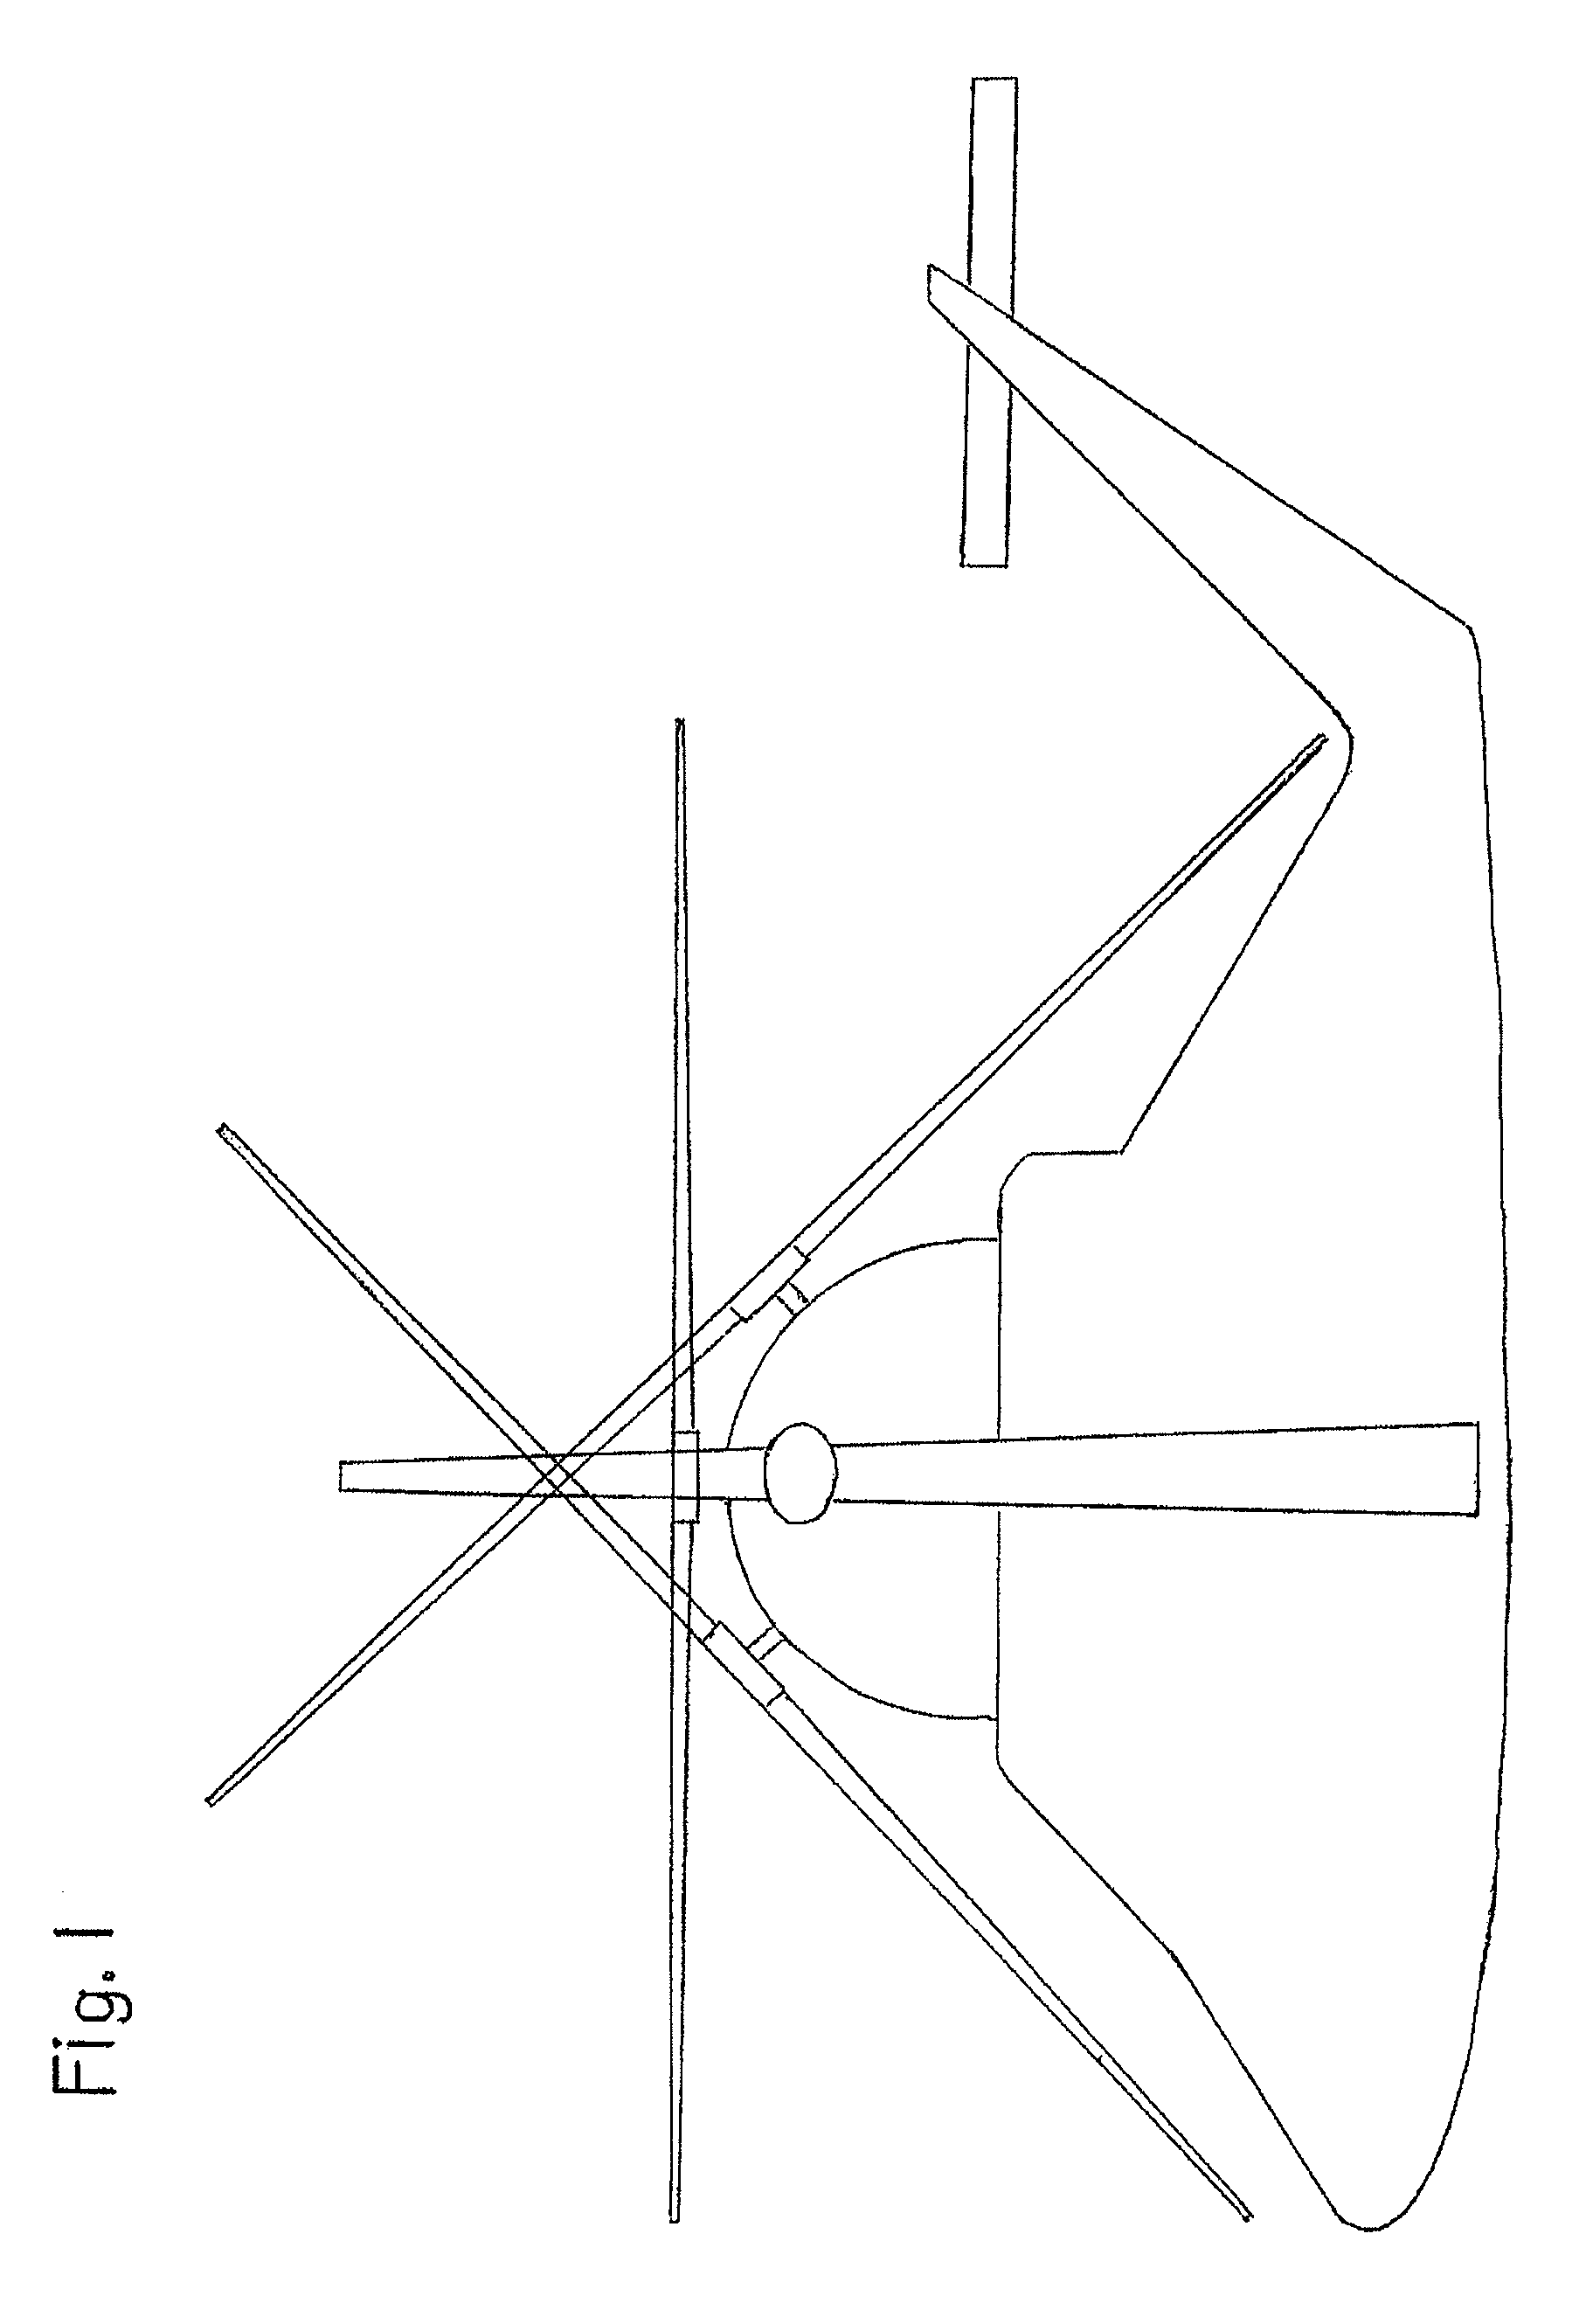 Direct orientation vector rotor